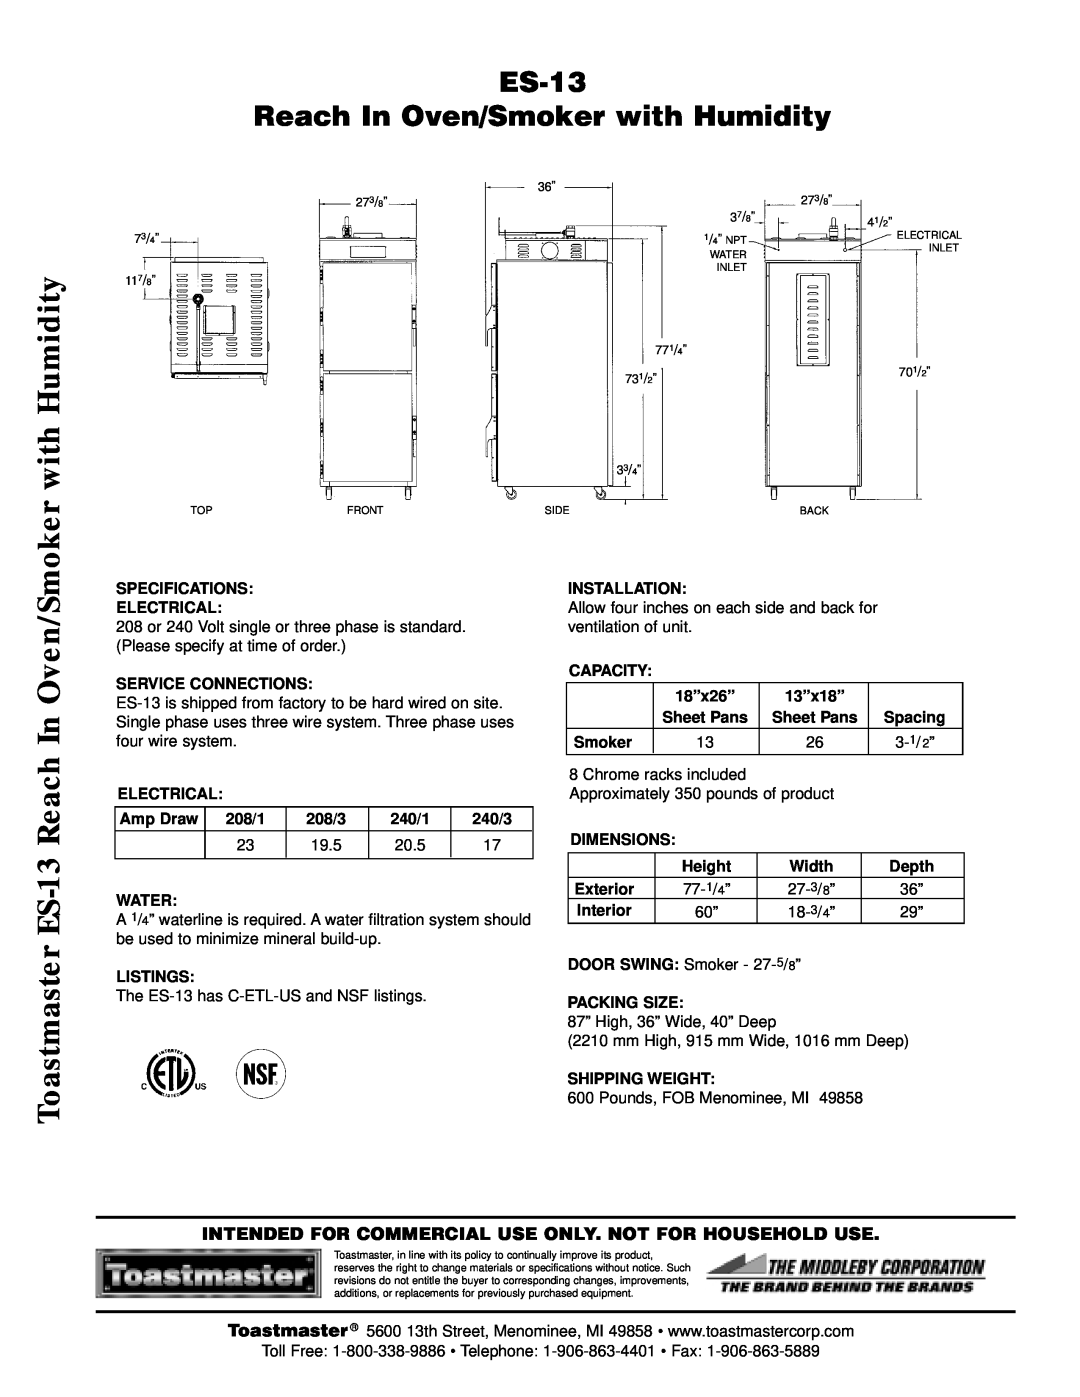 Toastmaster manual Toastmaster ES-13Reach In Oven/Smoker, ES-13 Reach In Oven/Smoker with Humidity 